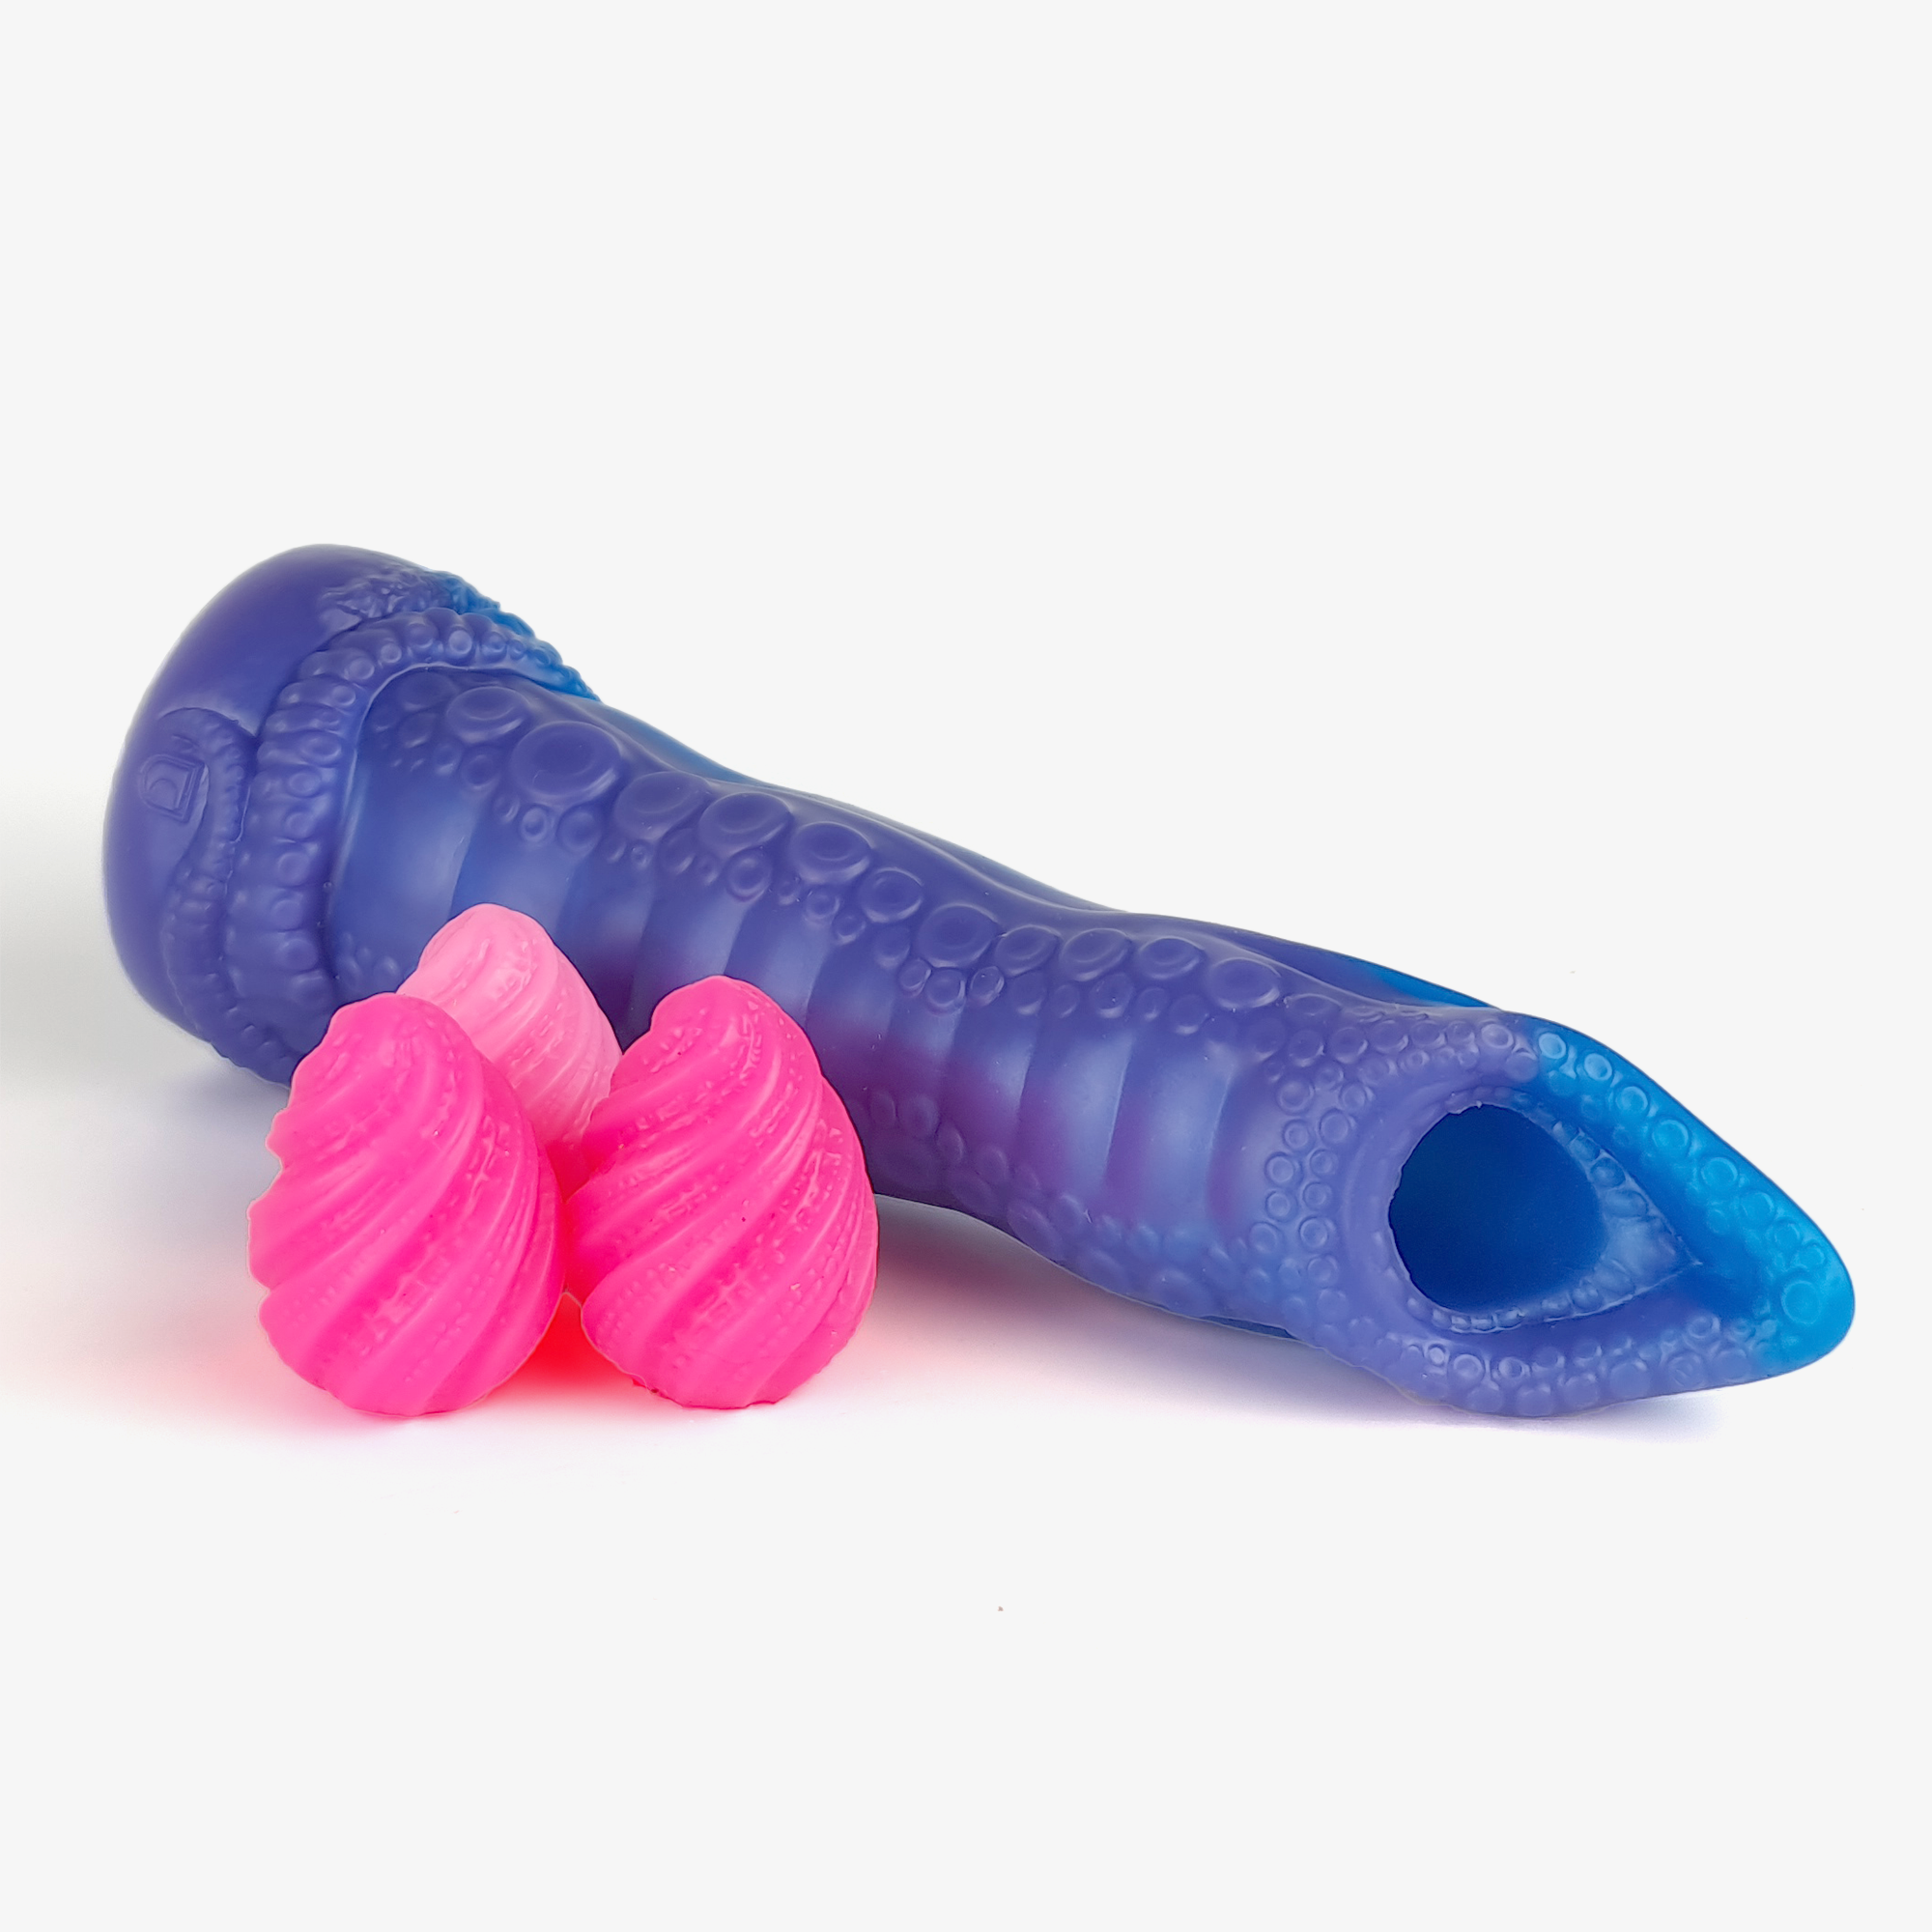 dennis majewski recommends Alien Sex Toy